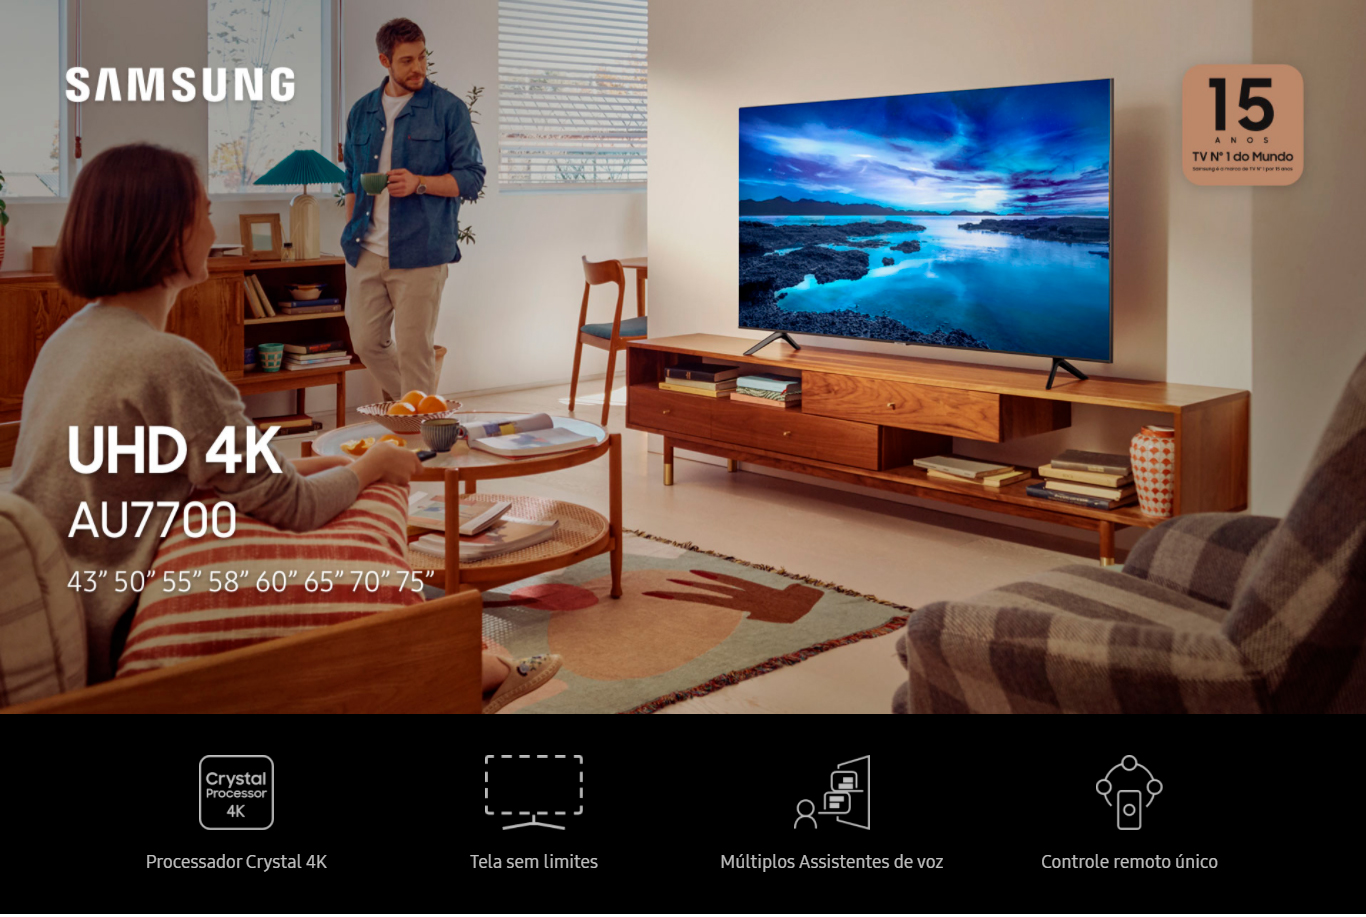  Smart TV Samsung 50 UHD 4K 50AU7700, Processador Crystal 4K, Tela sem limites, Visual Livre de Cabos, Alexa built in, Controle Único